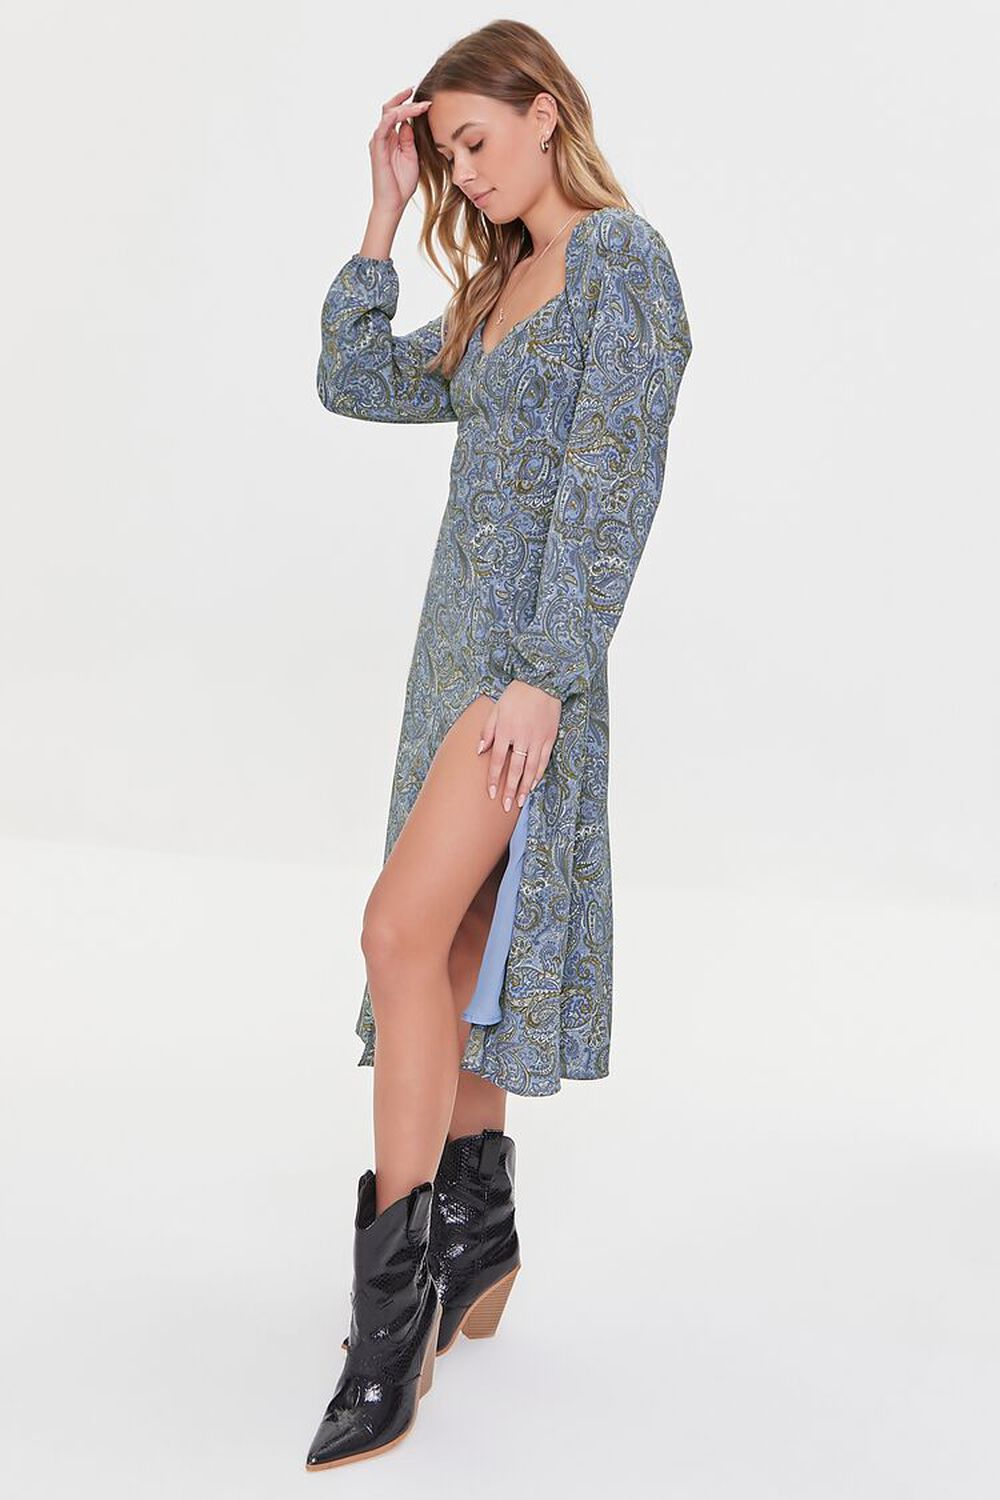 BLUE/MULTI Paisley Print Midi Dress, image 2